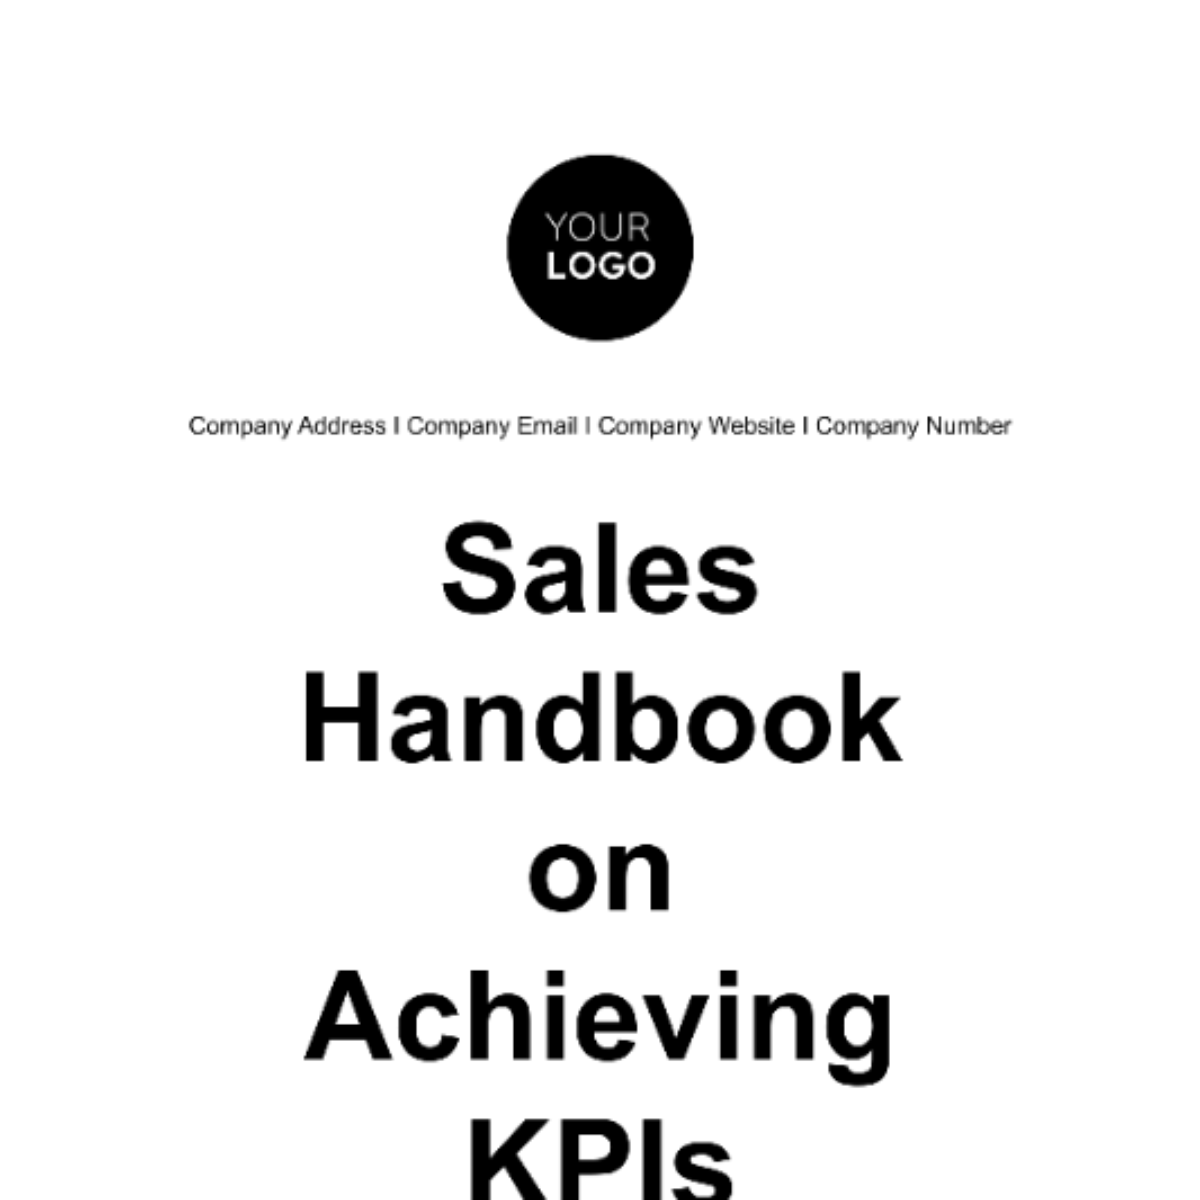 Sales Handbook on Achieving KPIs Template